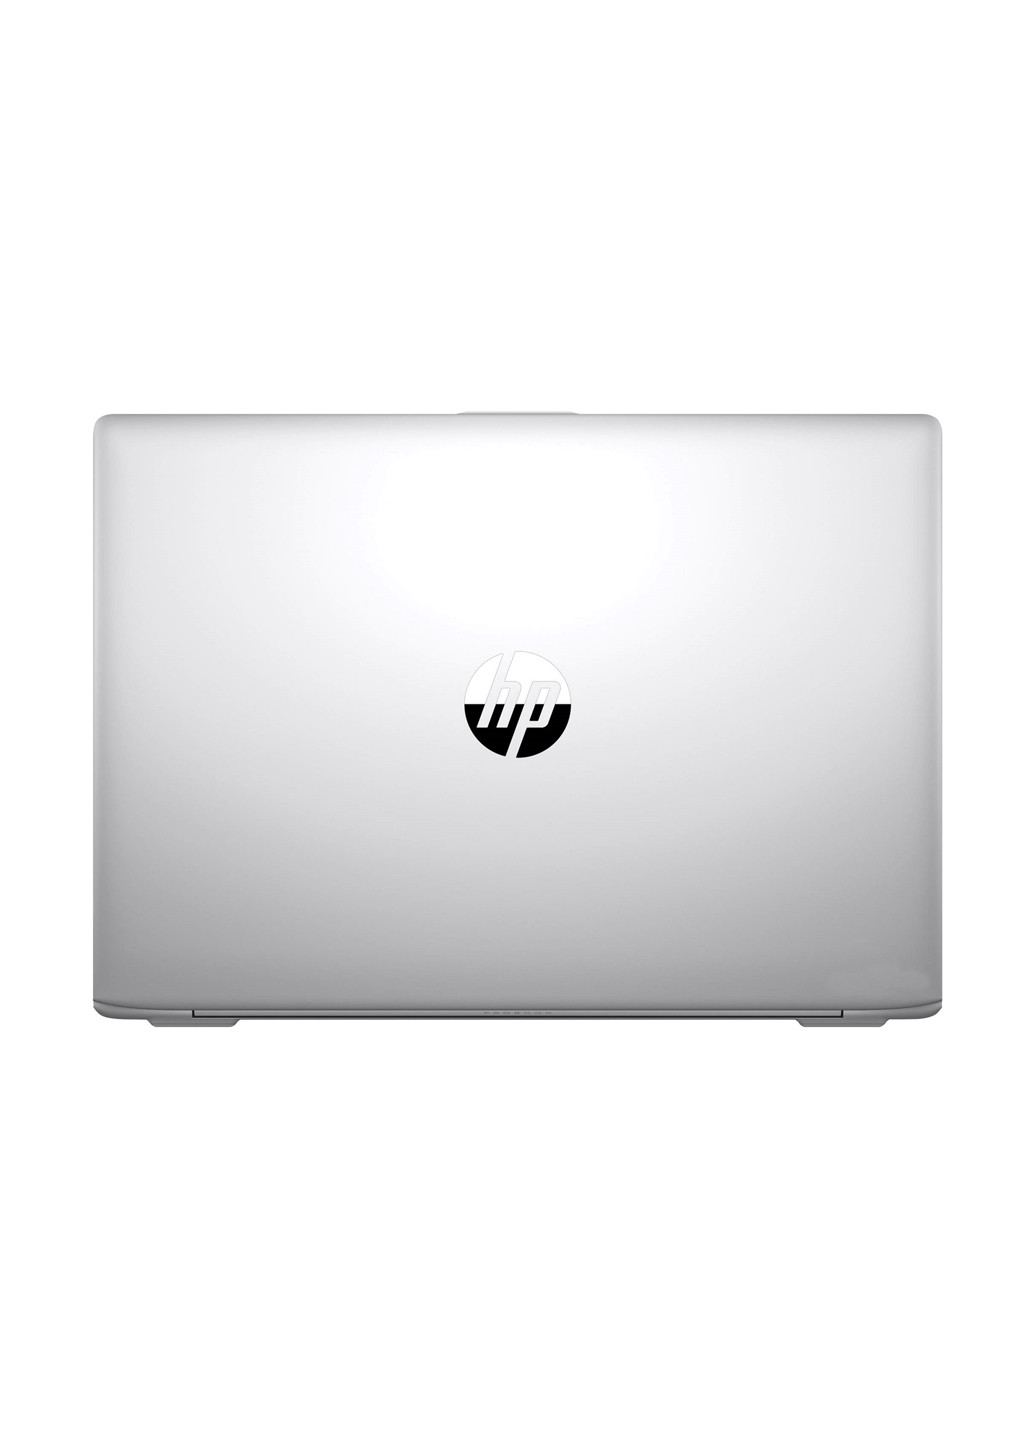 Ноутбук HP probook 440 g5 (3qm68ea) silver (136402380)